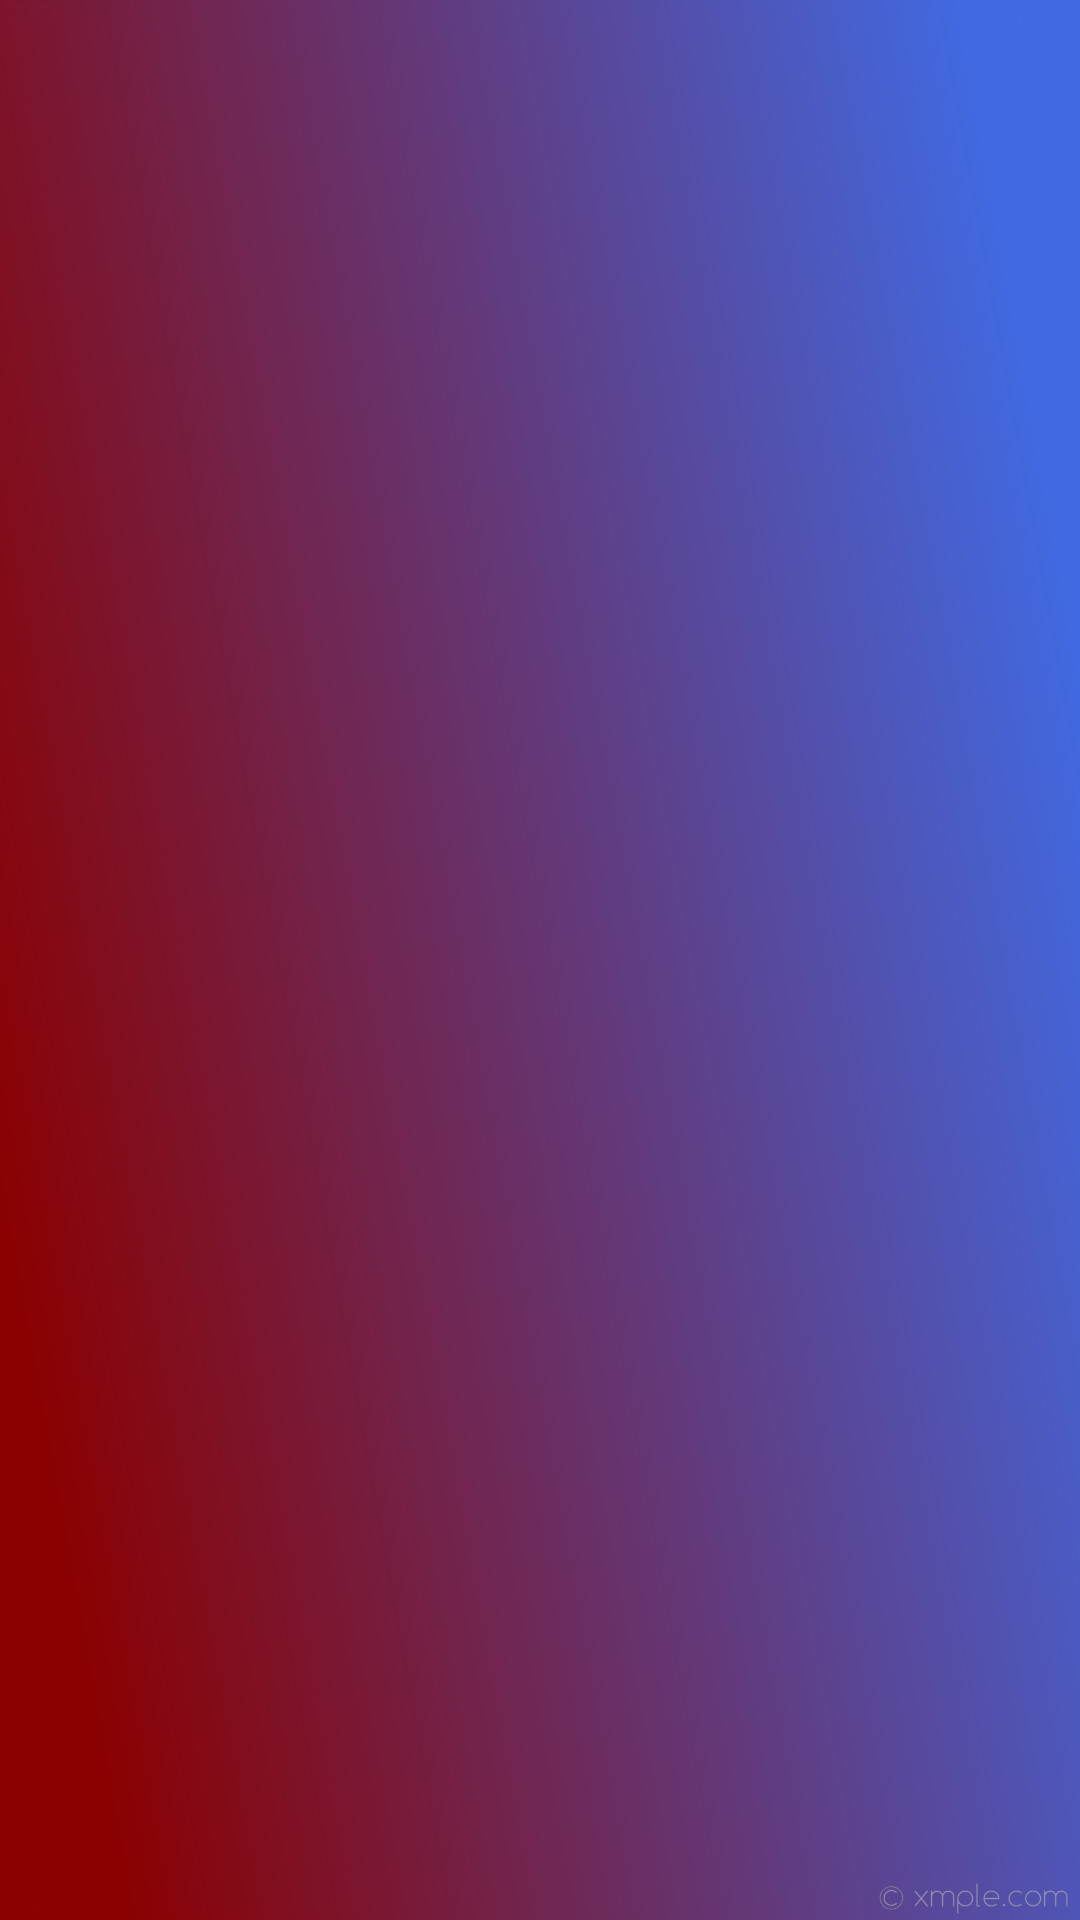 1080x1920 wallpaper gradient linear red blue dark red royal blue #8b0000 #4169e1 210Â°